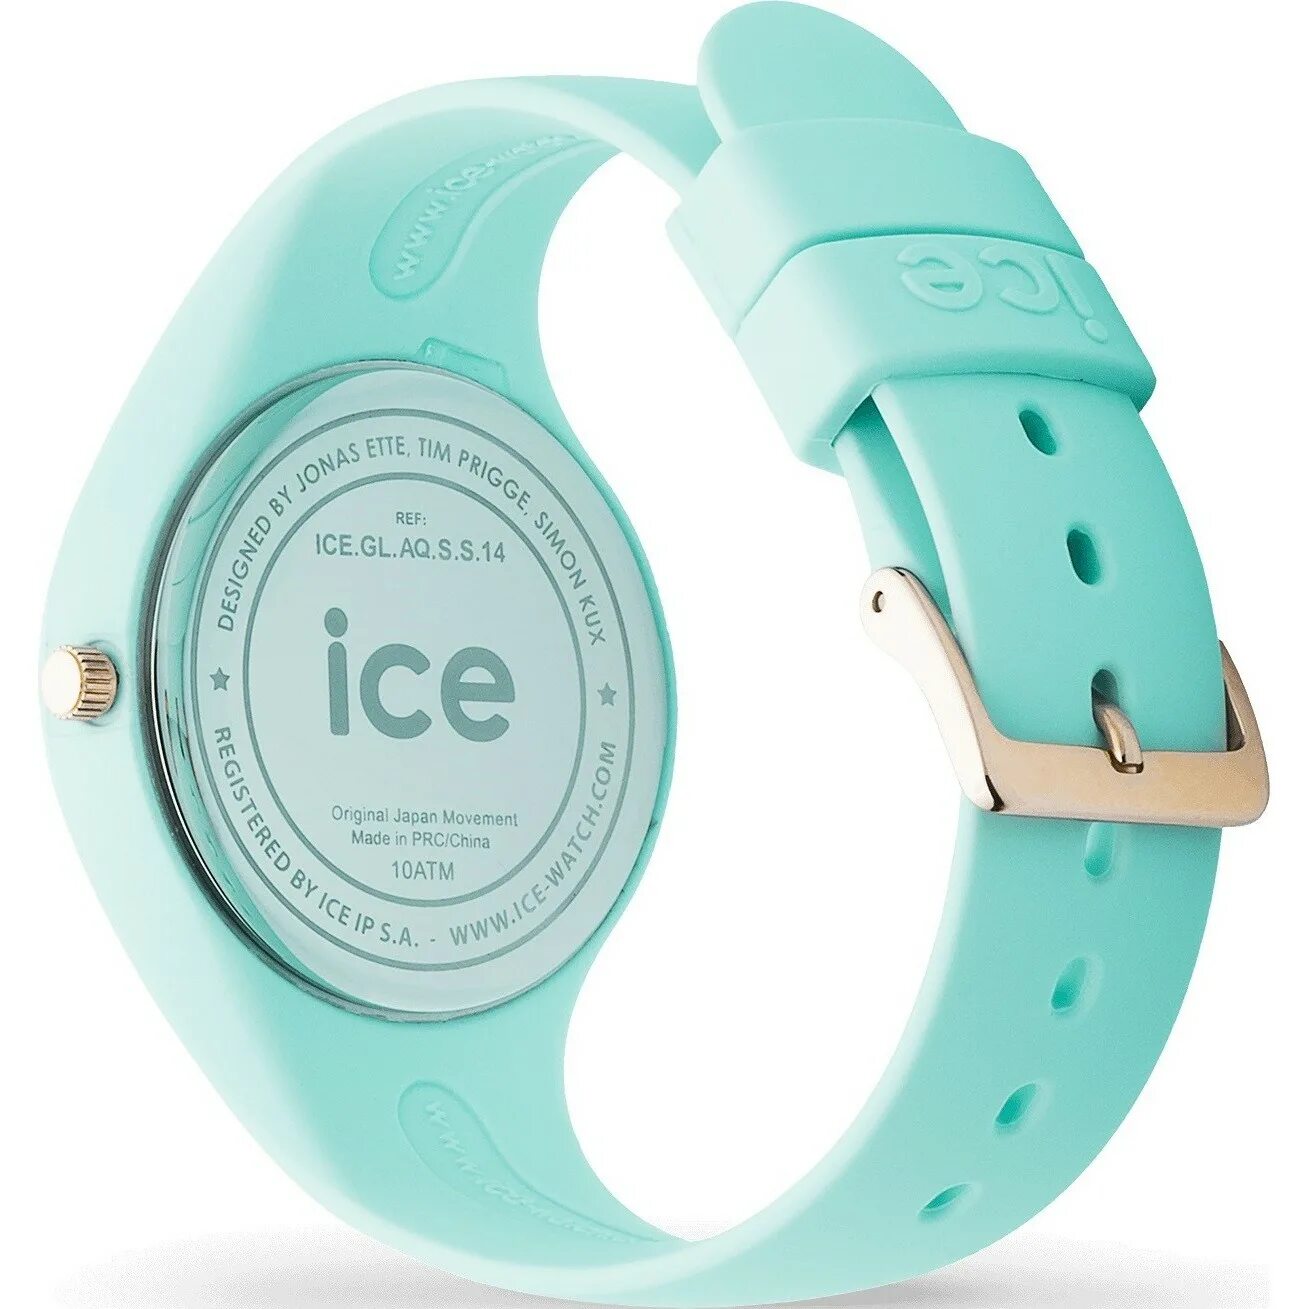 Часов ice watch. Часы Ice watch. Ice watch часы спортивные женские. Ice watch Ice Glam Pastel. Часы Ice watch характеристики.